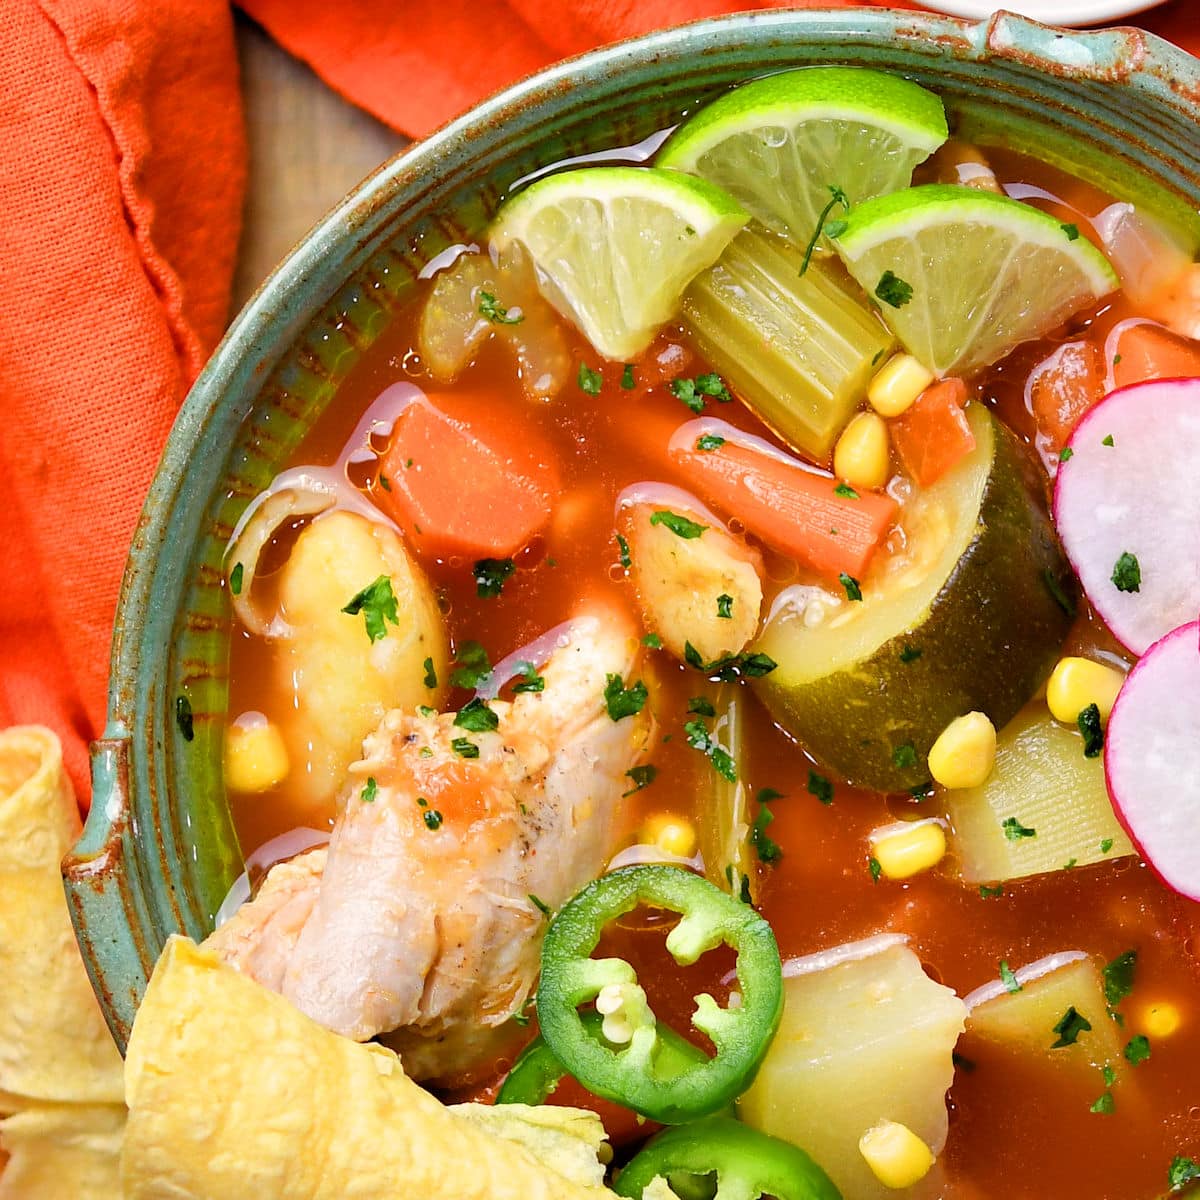 Caldo de Pollo (Mexican Chicken Soup Recipe) - Muy Bueno